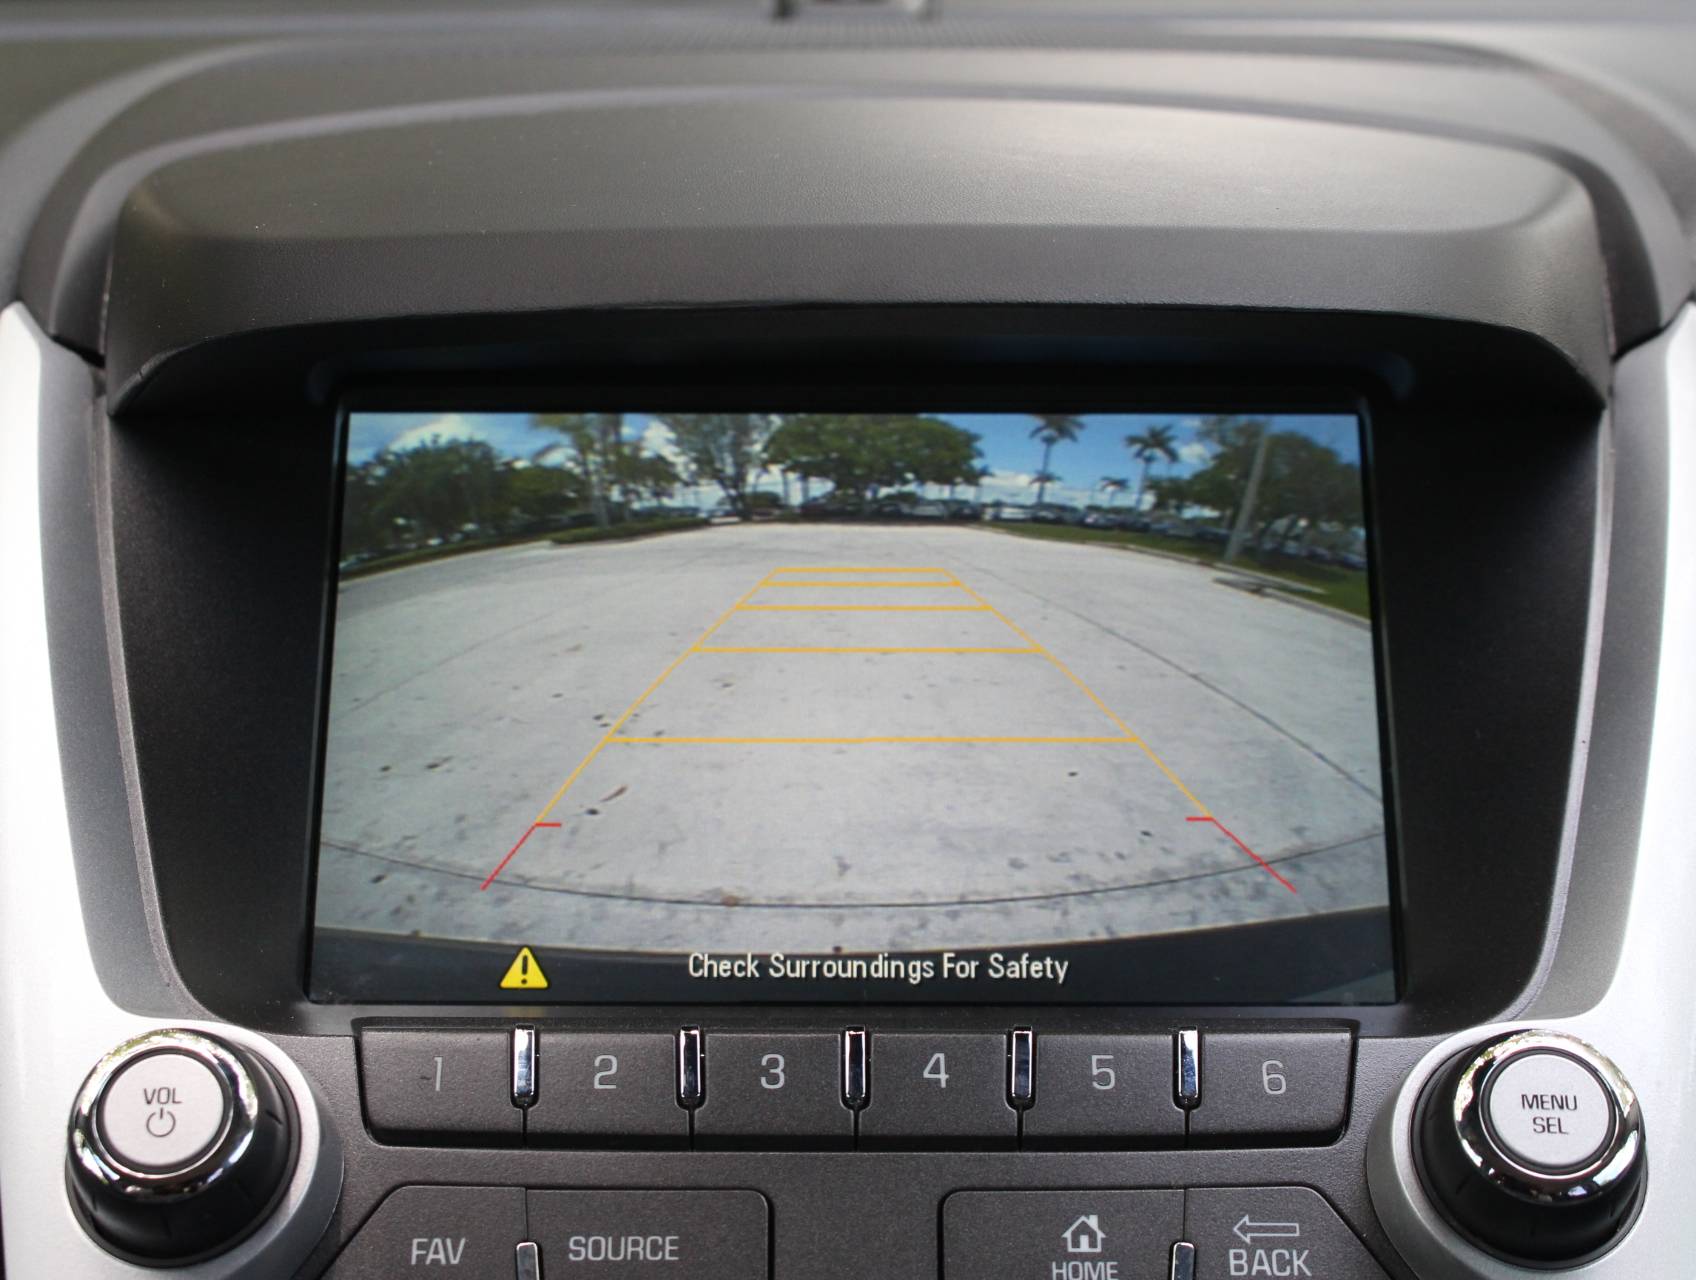 Florida Fine Cars - Used CHEVROLET EQUINOX 2015 MARGATE 1LT